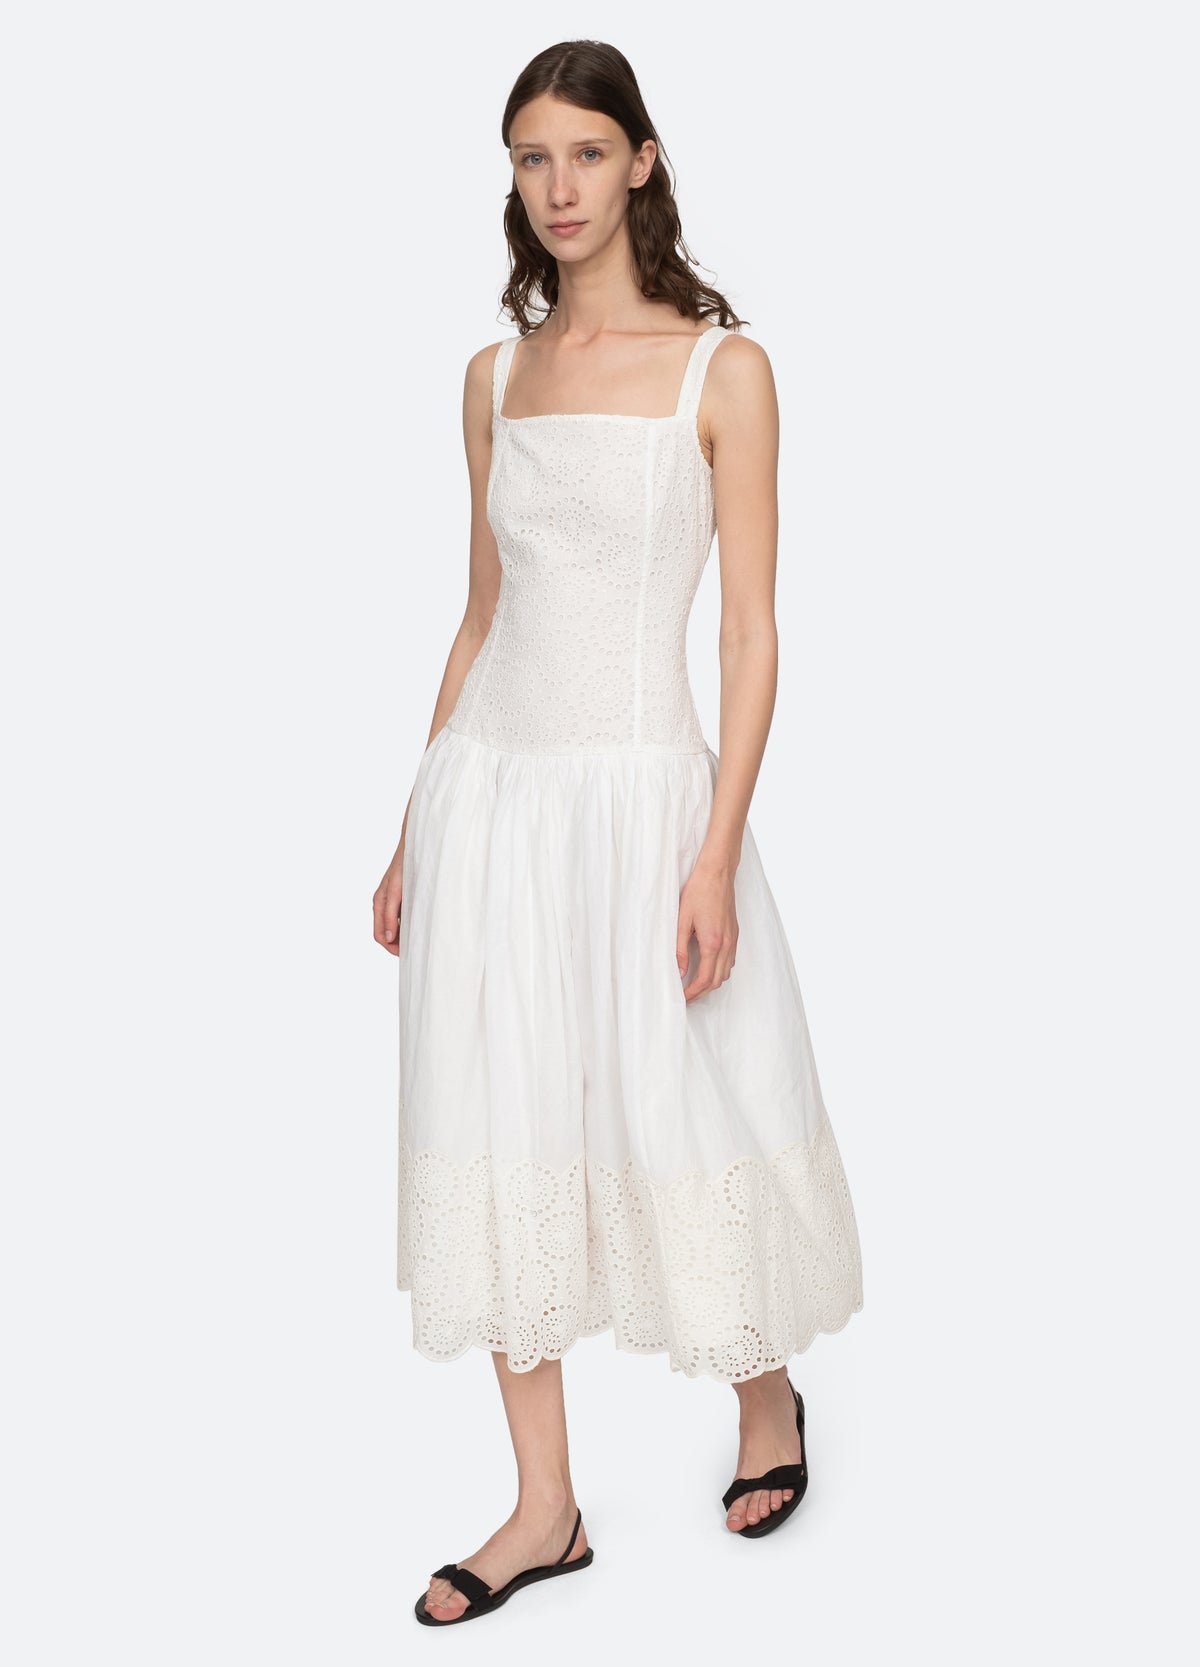 white-maeve dress-three quarter view - 10